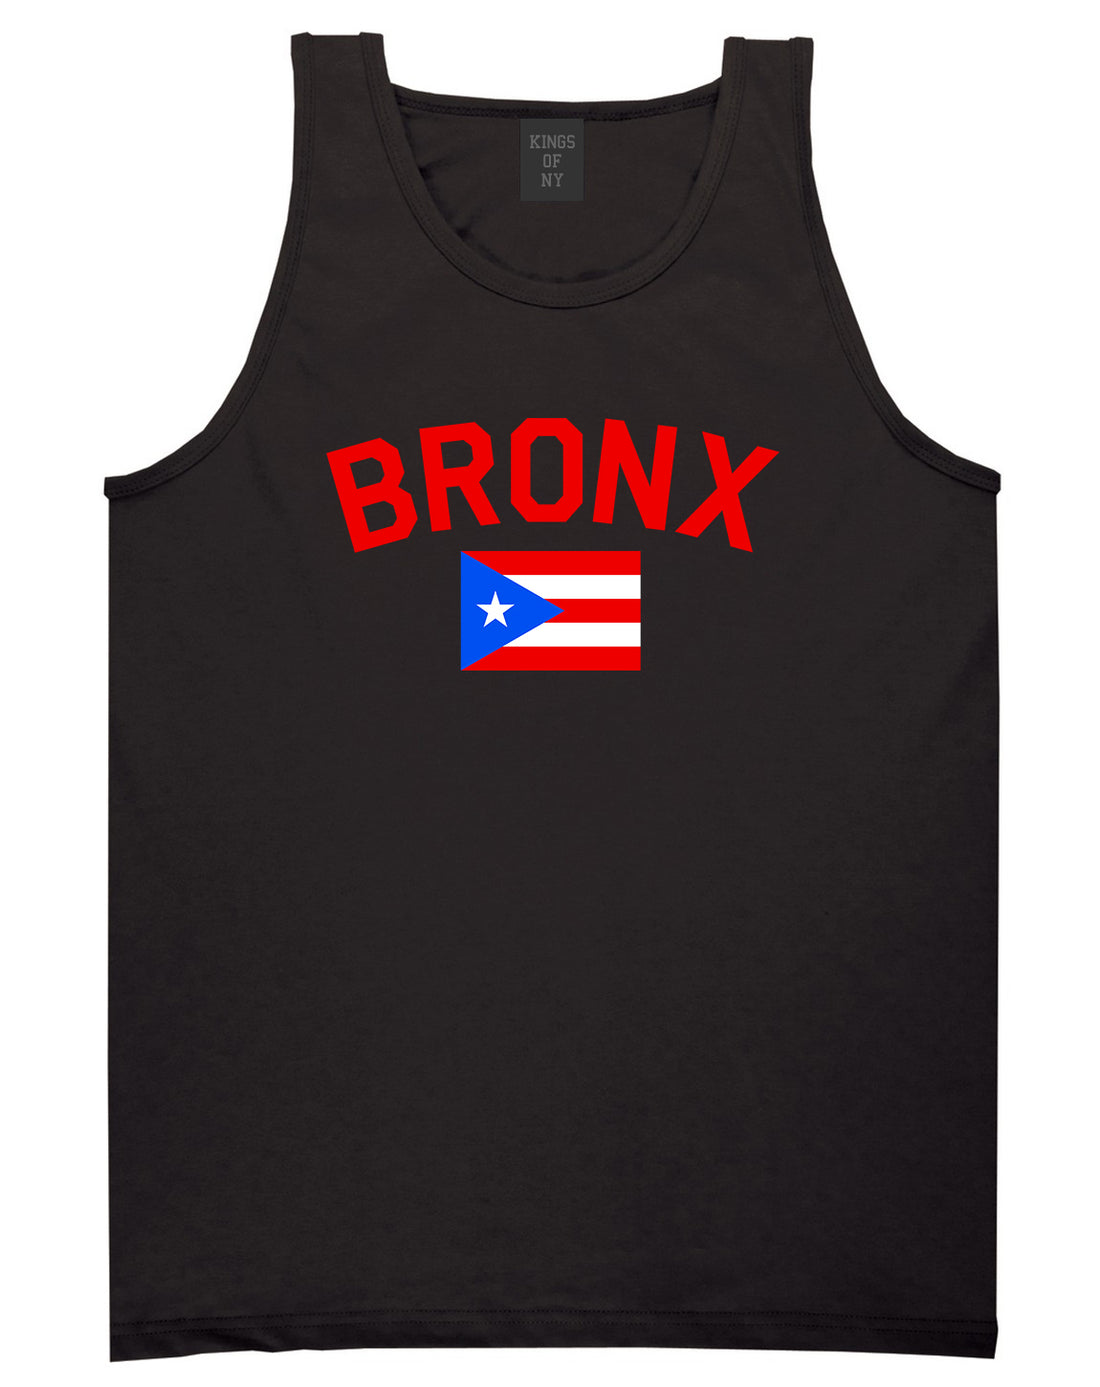 Bronx Puerto Rico Flag Mens Tank Top T-Shirt Black